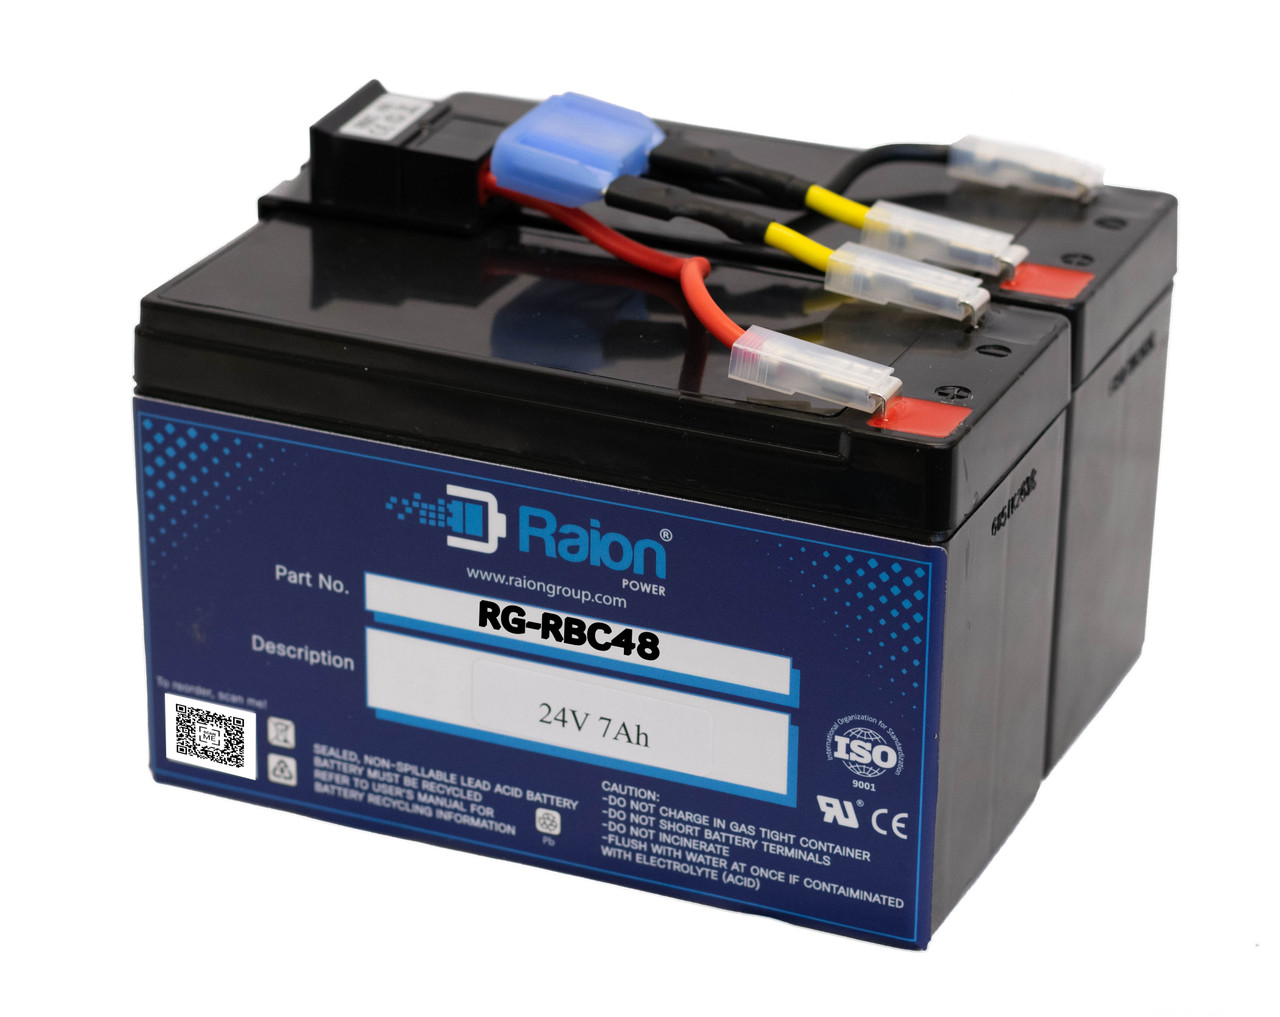 Raion Power RG-RBC48 replacement RBC48 battery cartridge for APC Smart-UPS 750VA SUA750US